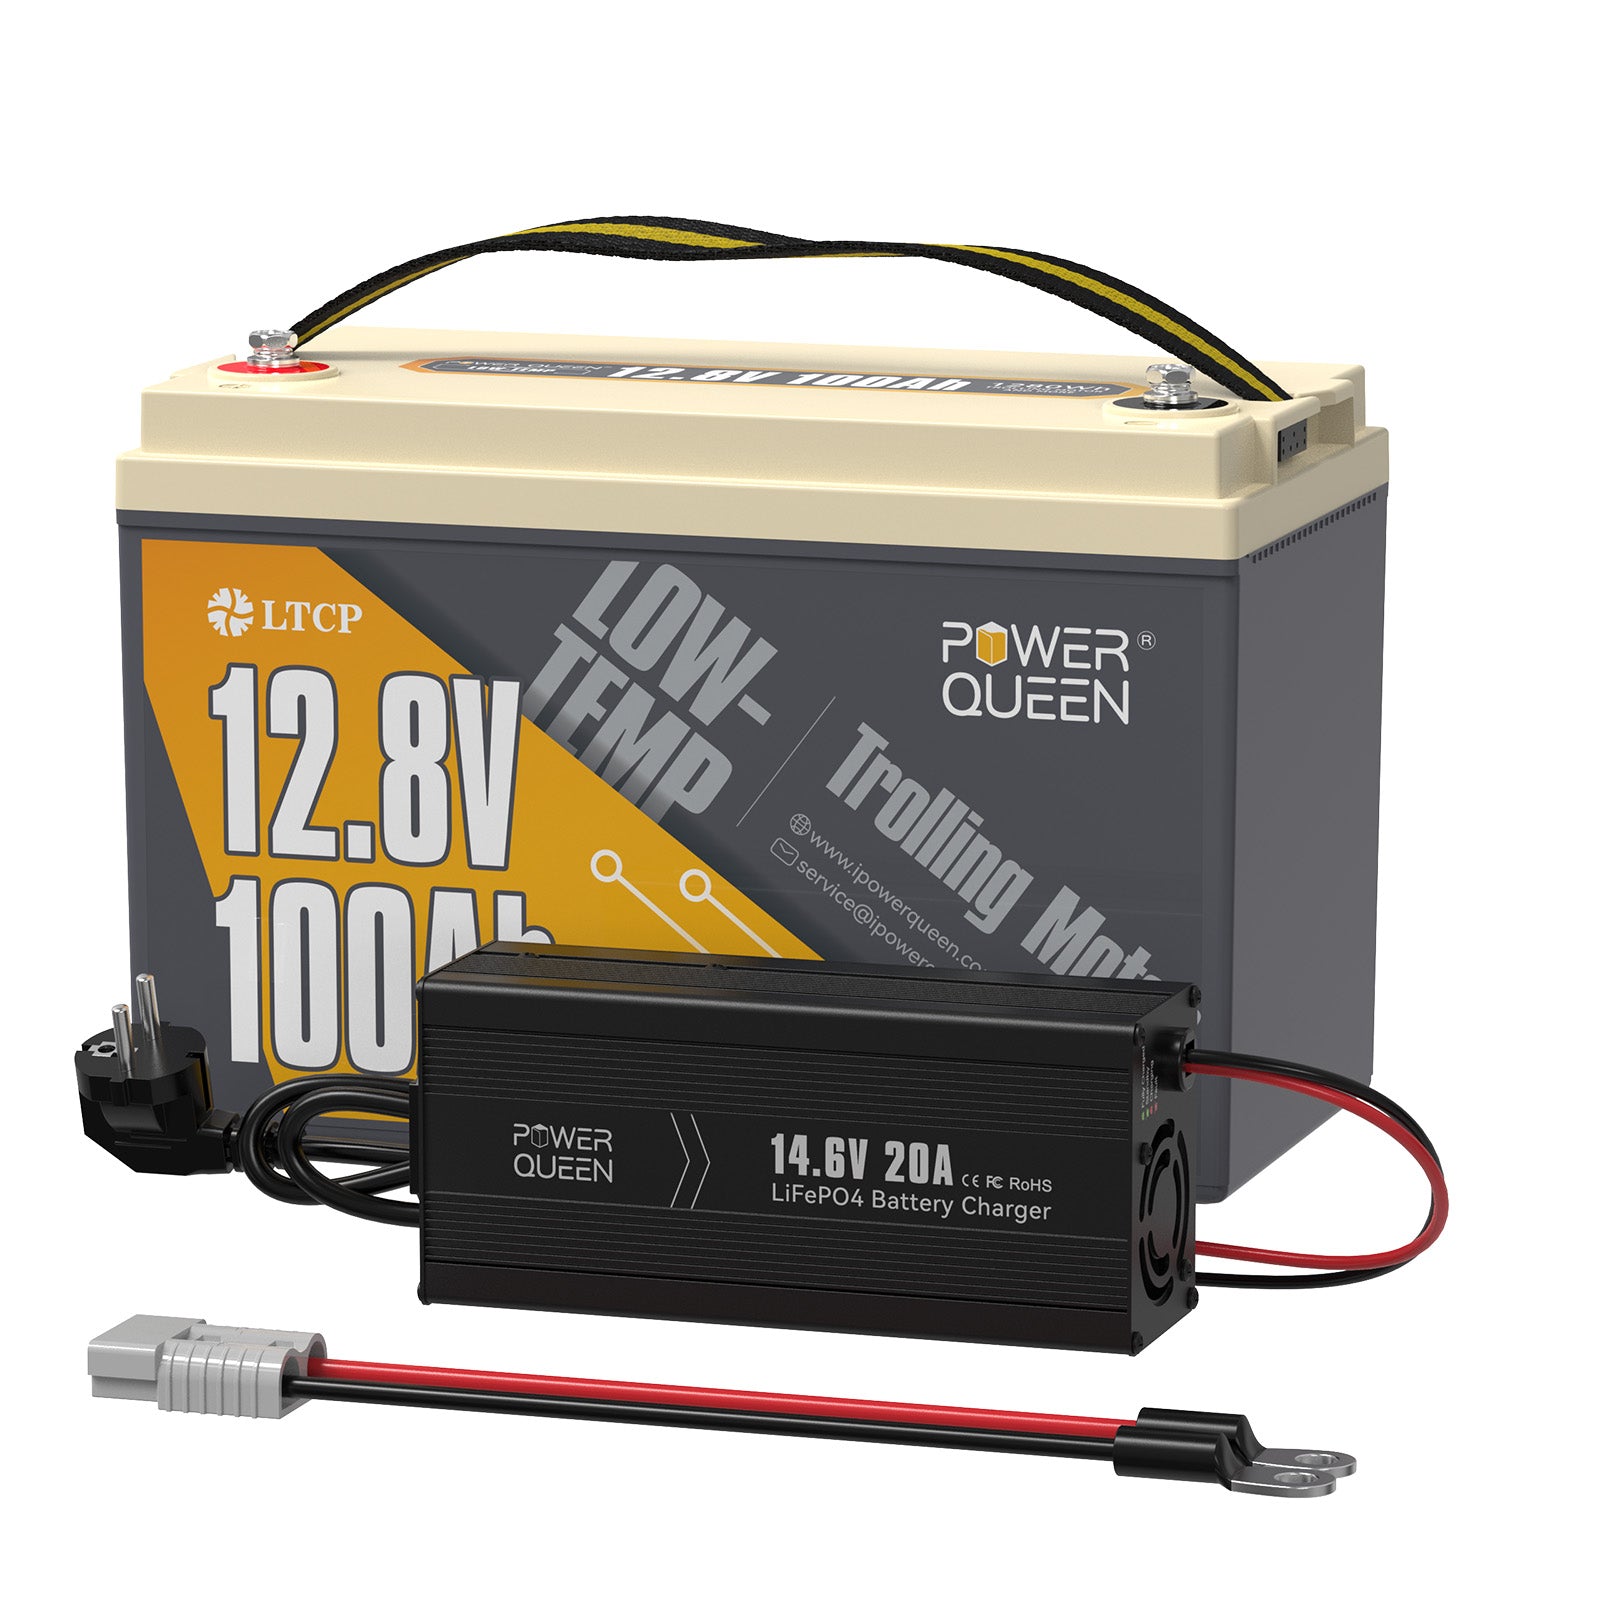 【0% IVA】Batteria Power Queen 12V 100Ah LiFePO4 a bassa temperatura, 100A BMS per motore da pesca alla traina